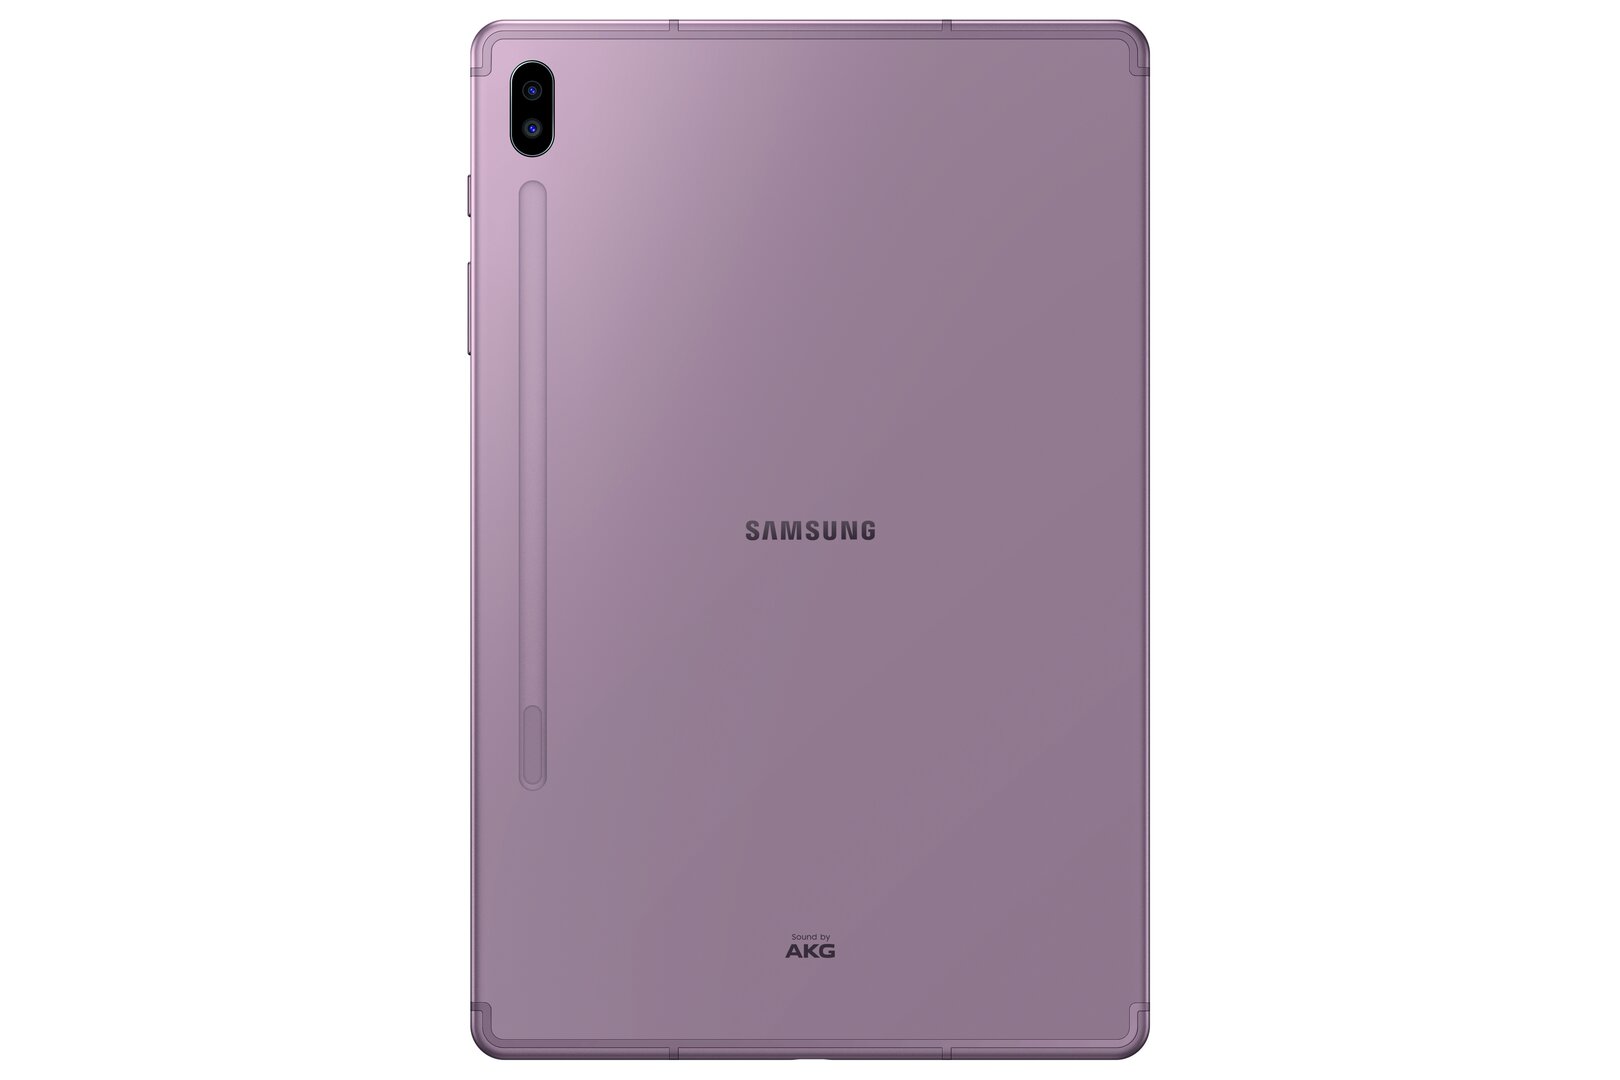 Samsung Galaxy Tab S6 in Rose Blush